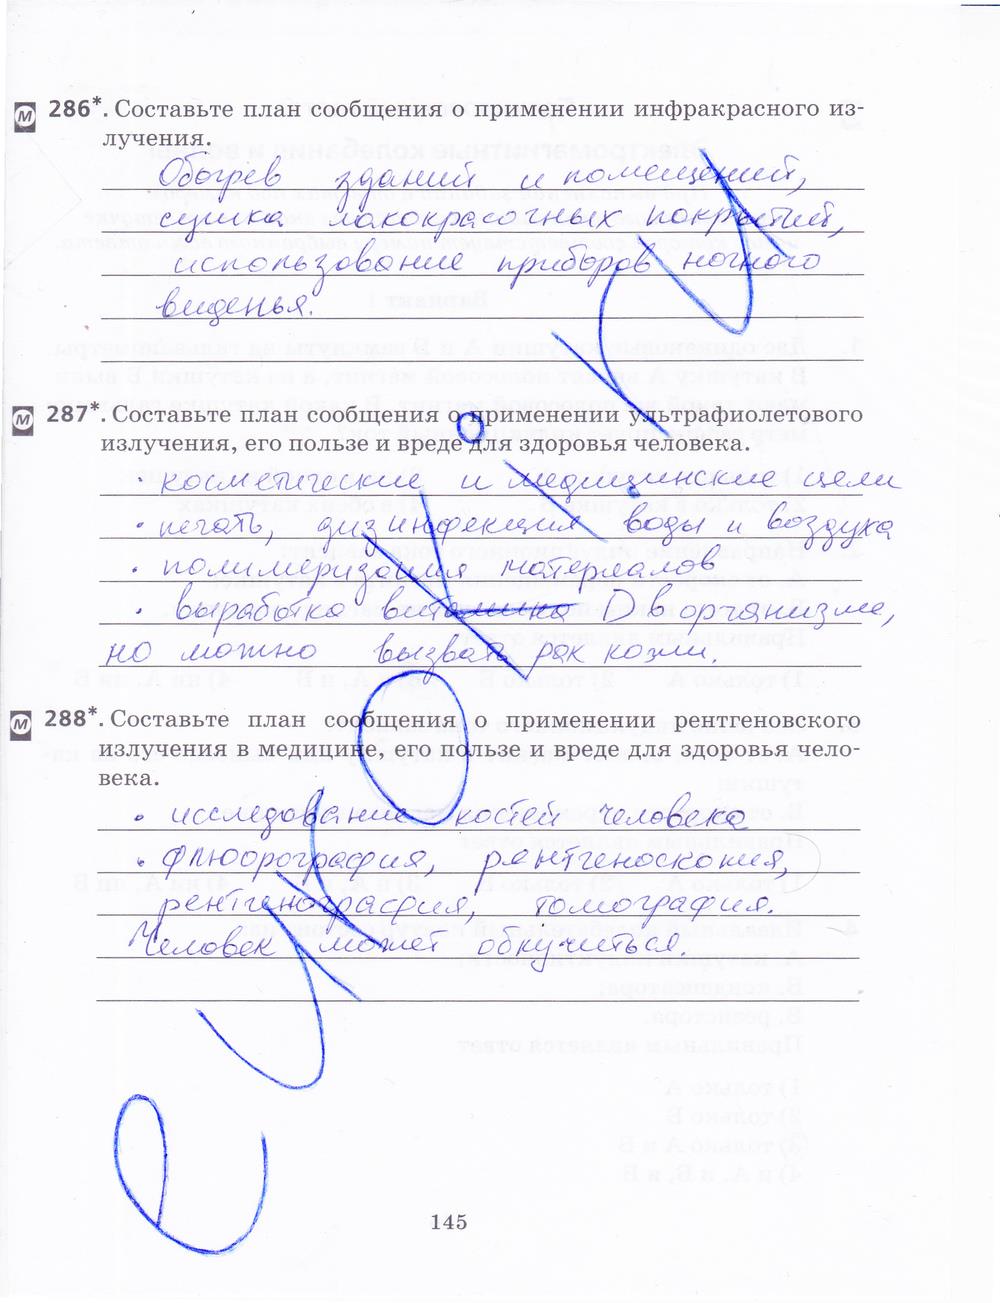 гдз 9 класс рабочая тетрадь страница 145 физика Пурышева, Важеевская, Чаругин